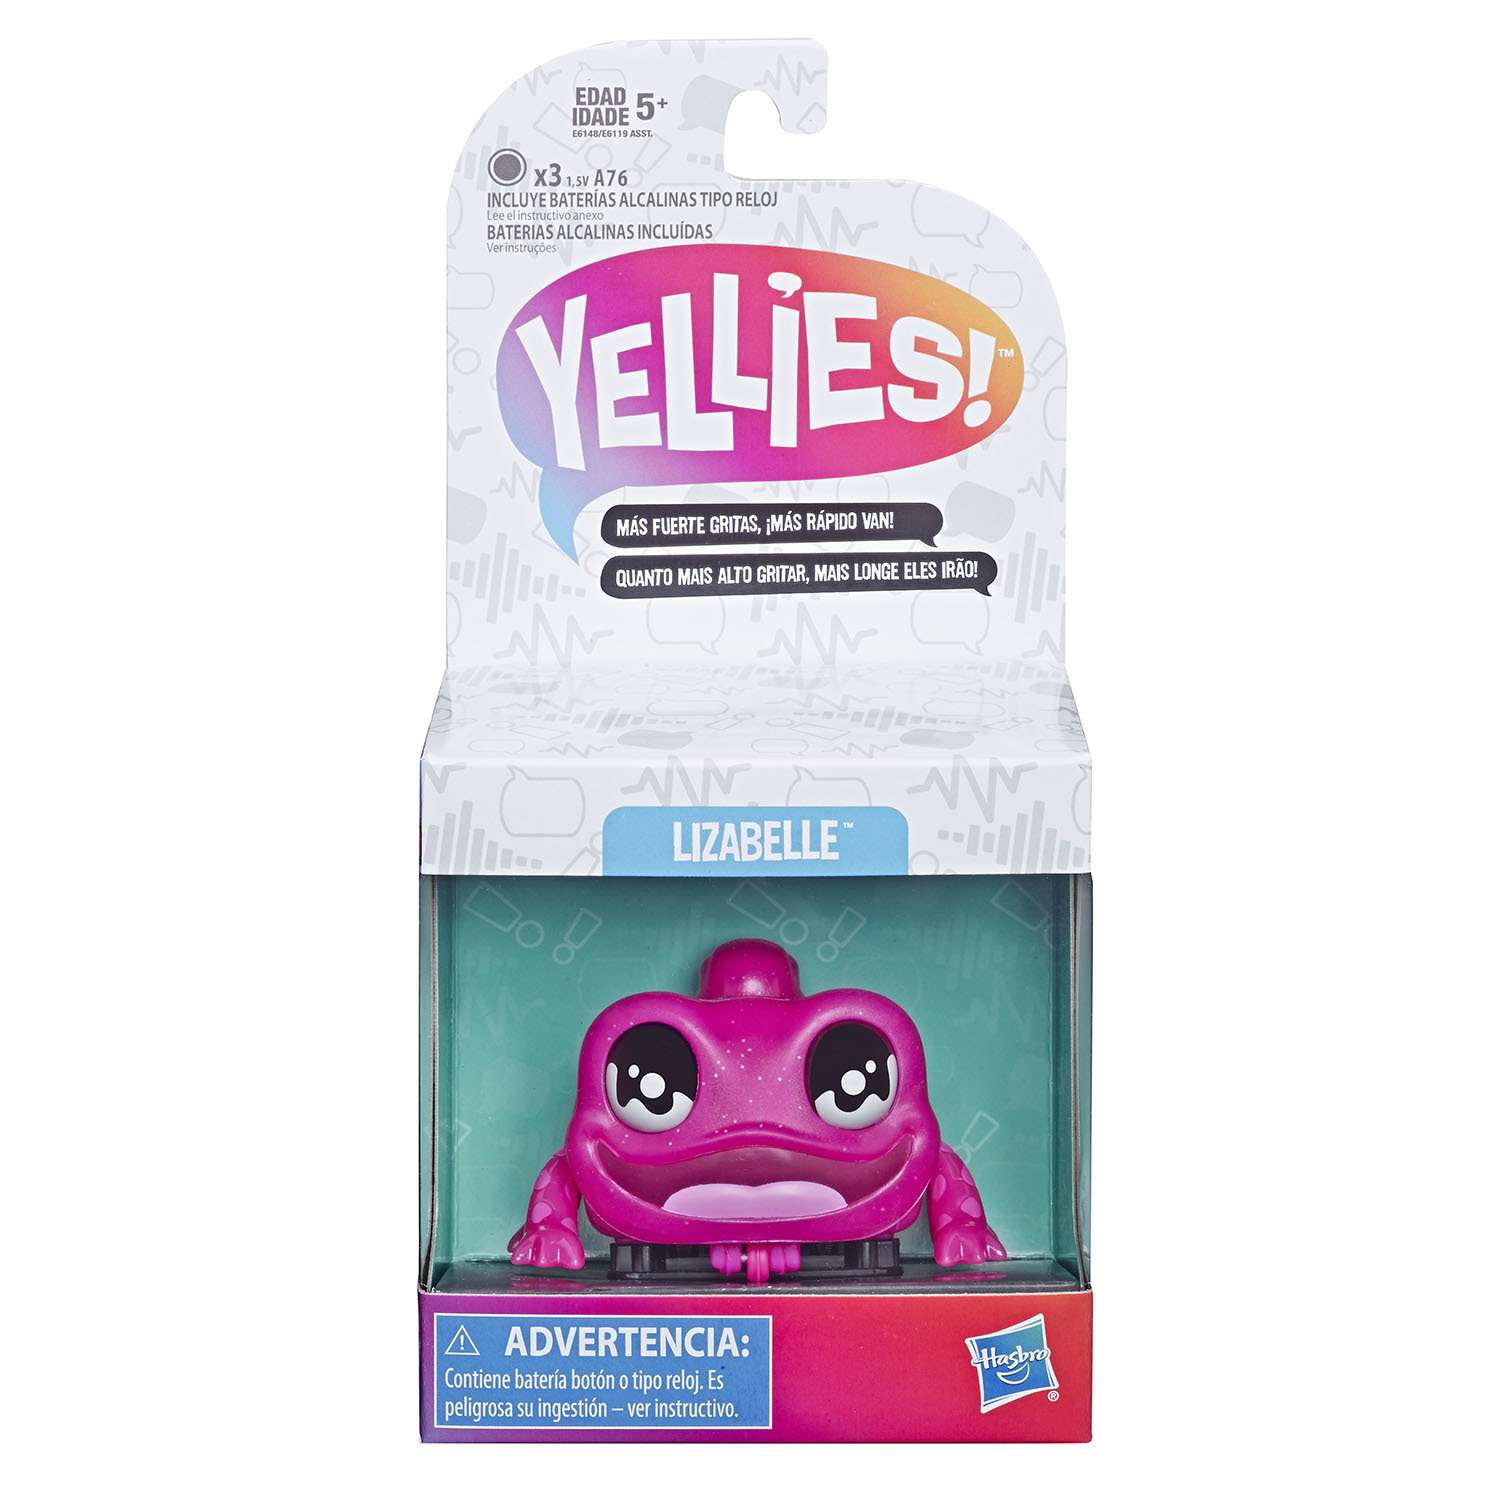 Игрушка Yellies (Yellies) Ящерица Лизабелль интерактивная E6148EU4 - фото 2